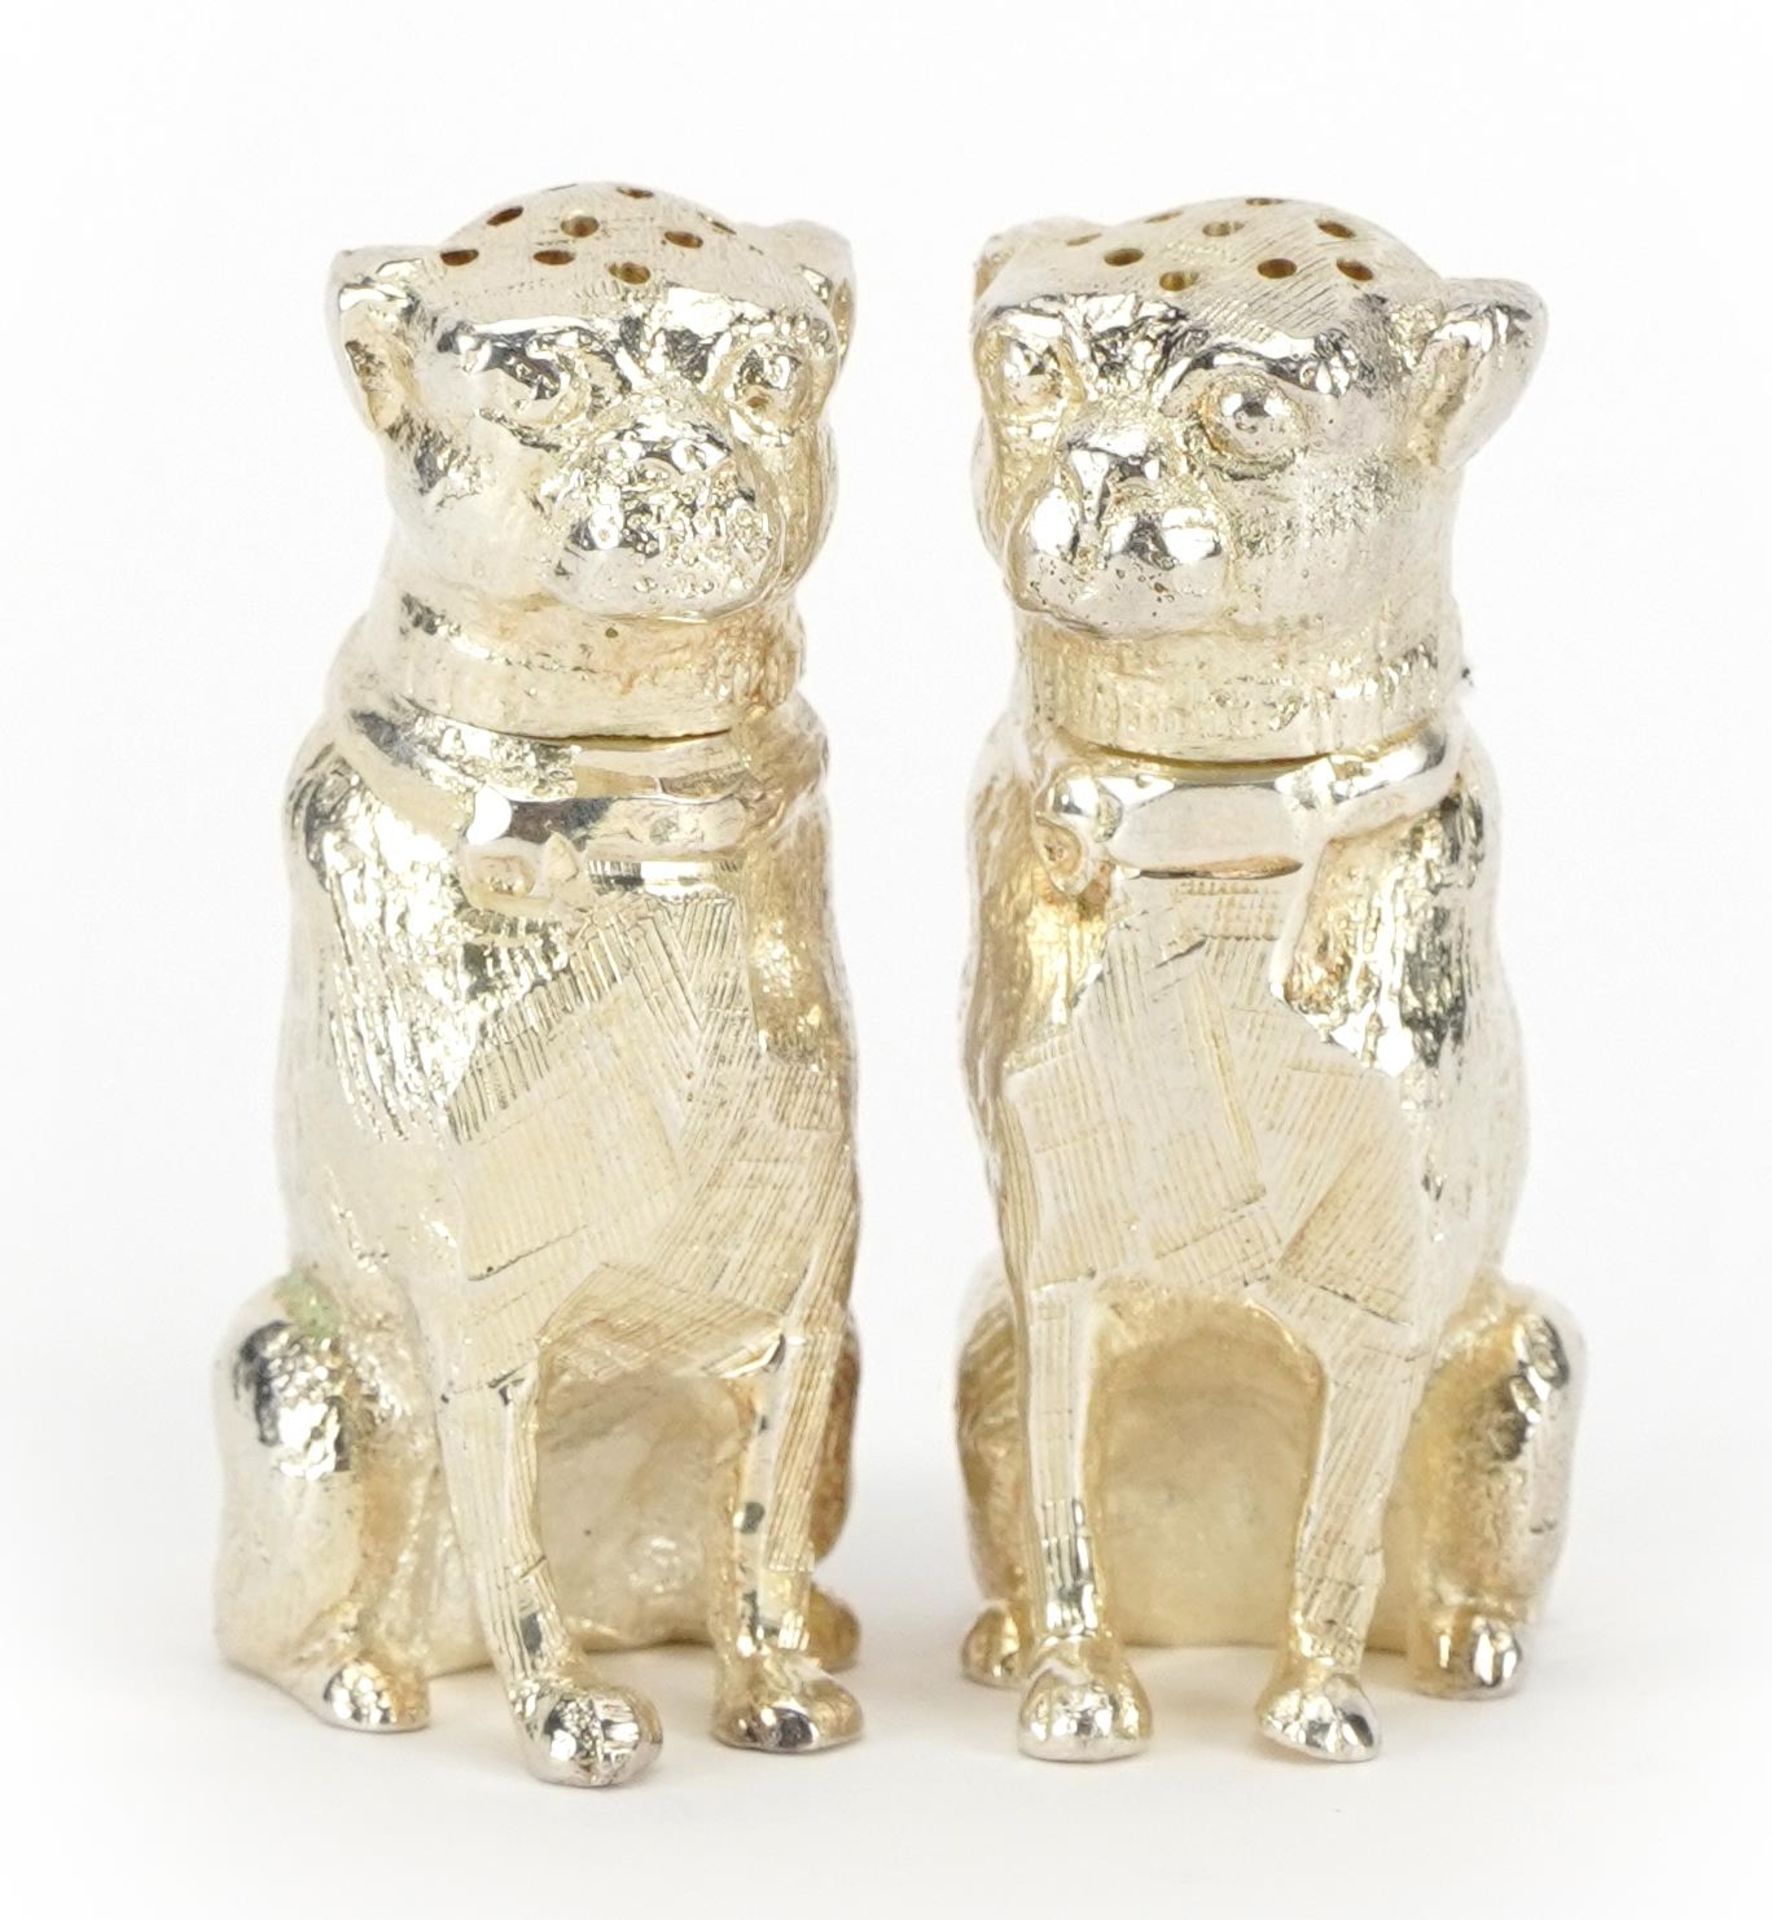 Novelty silver plated Pug dog design salt and pepper cellars, each 6cm high